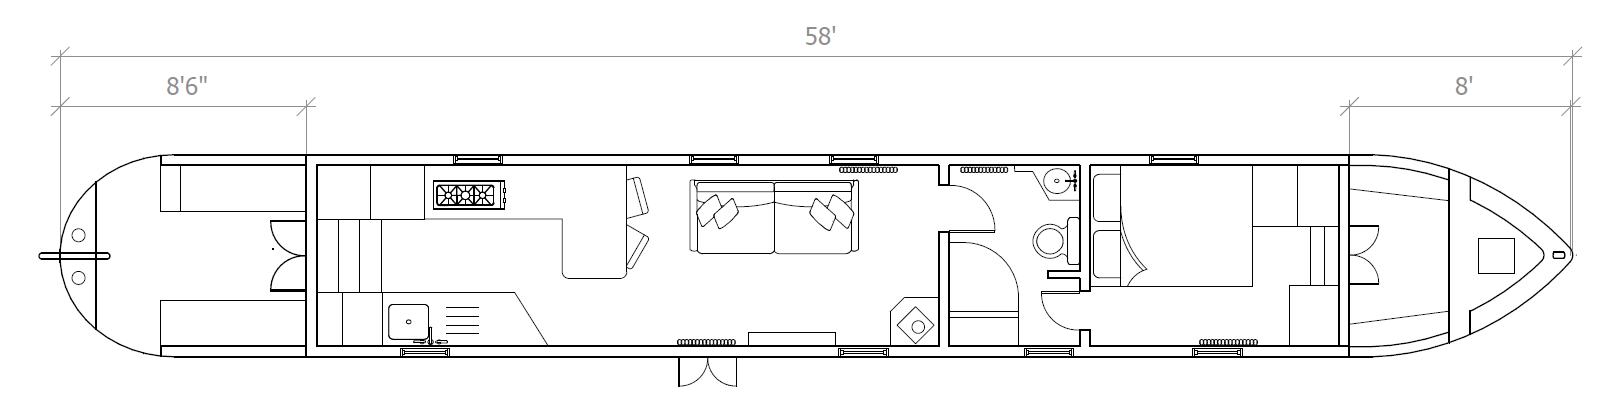 Floorplan of 58 foot narrowboat for sale styled by Skipperlings